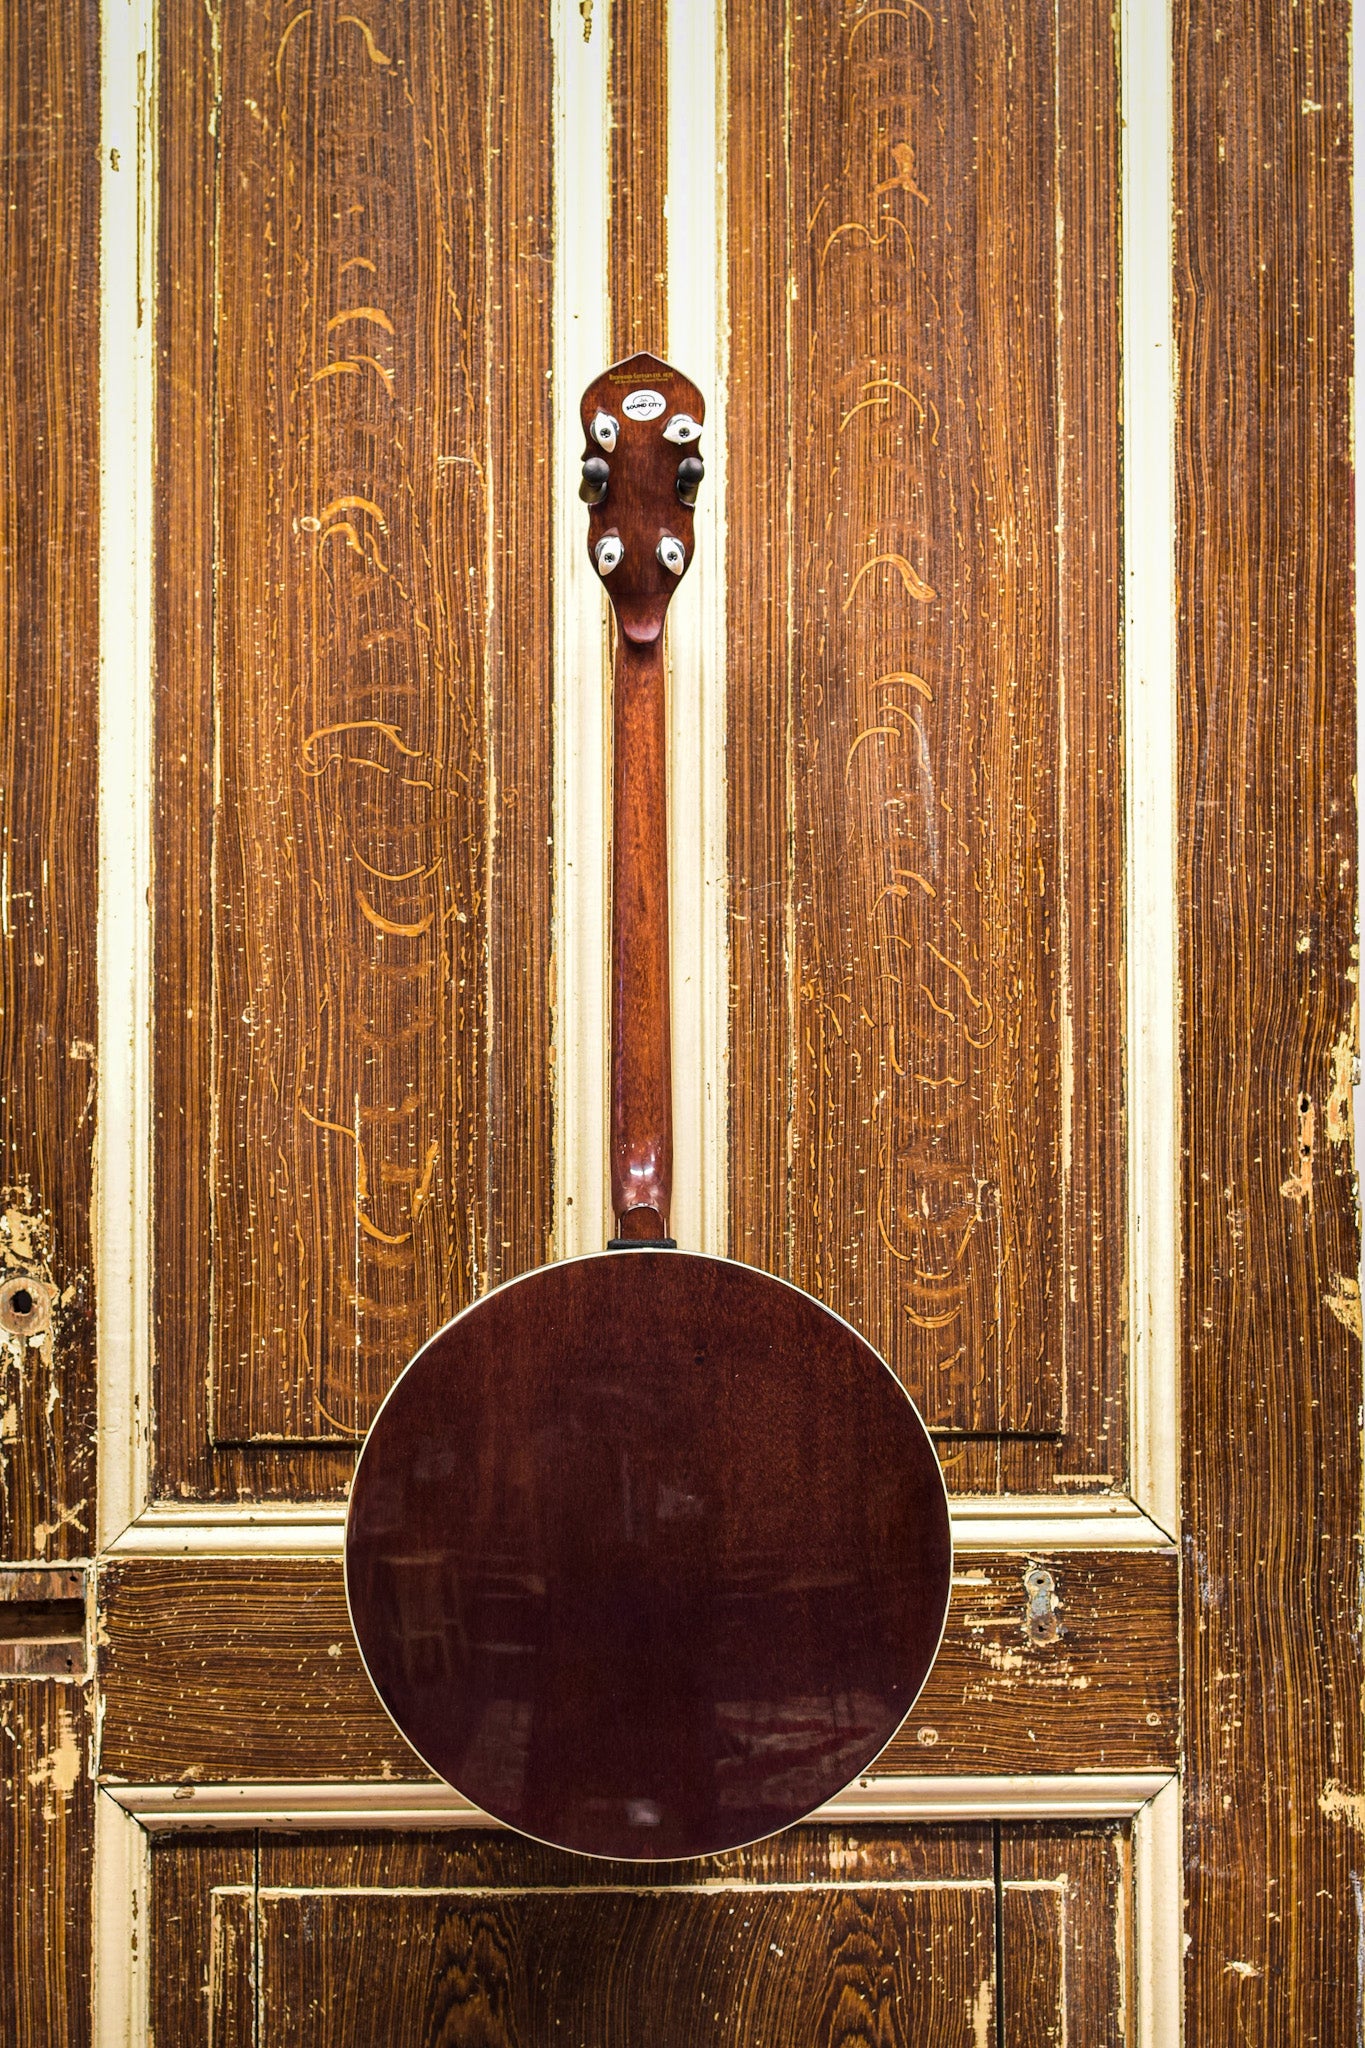 Richwood RMB-604 Master Series Tenor banjo (4sn.)